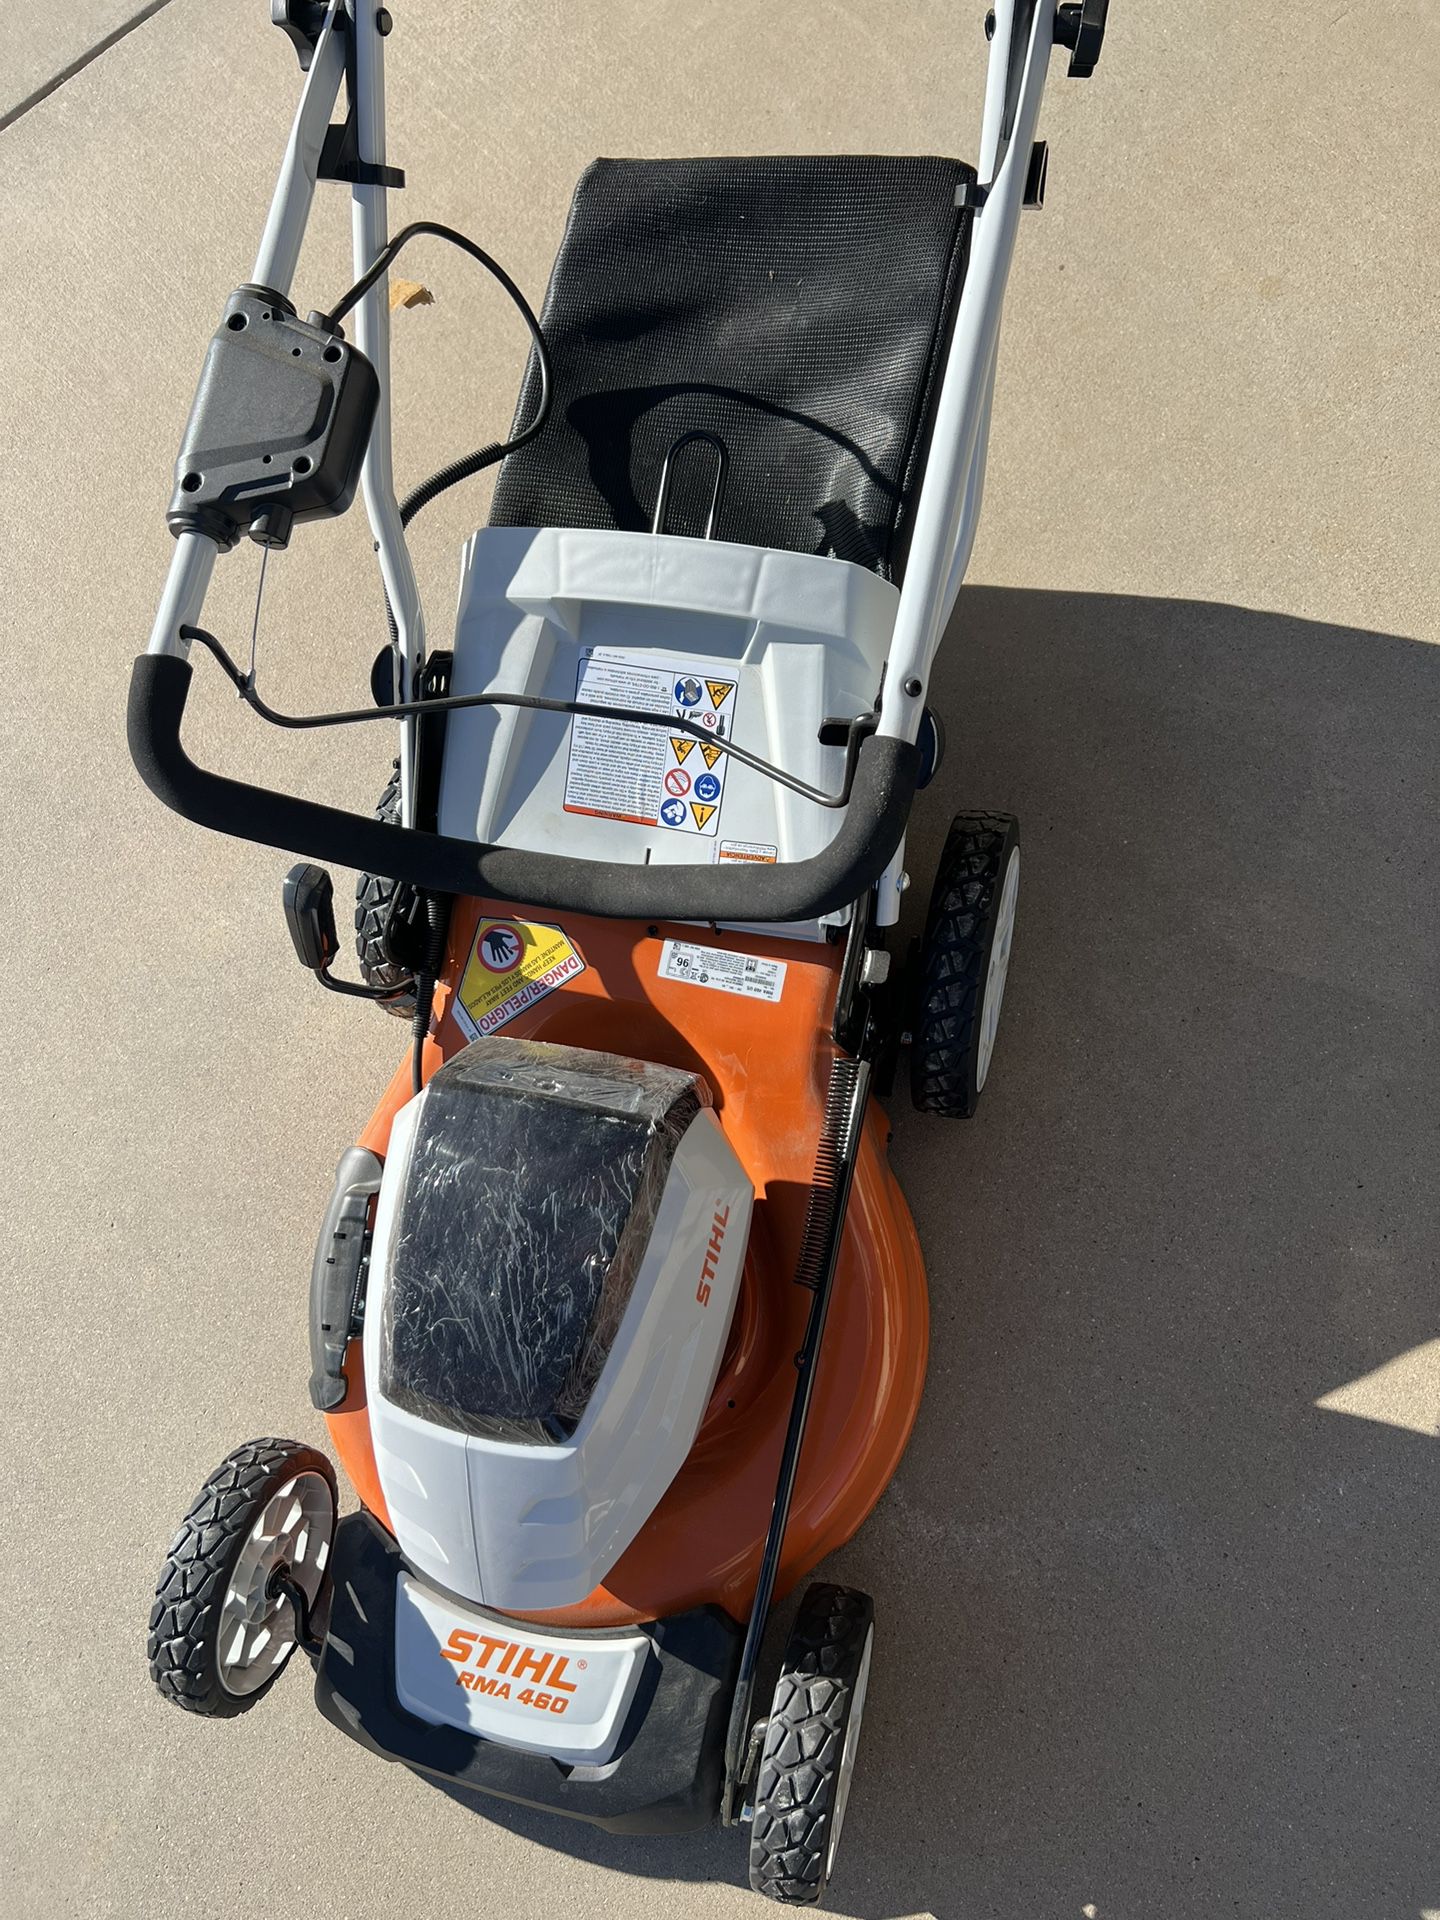 Stilz RMA 460 Battery Operated Lawn Mower